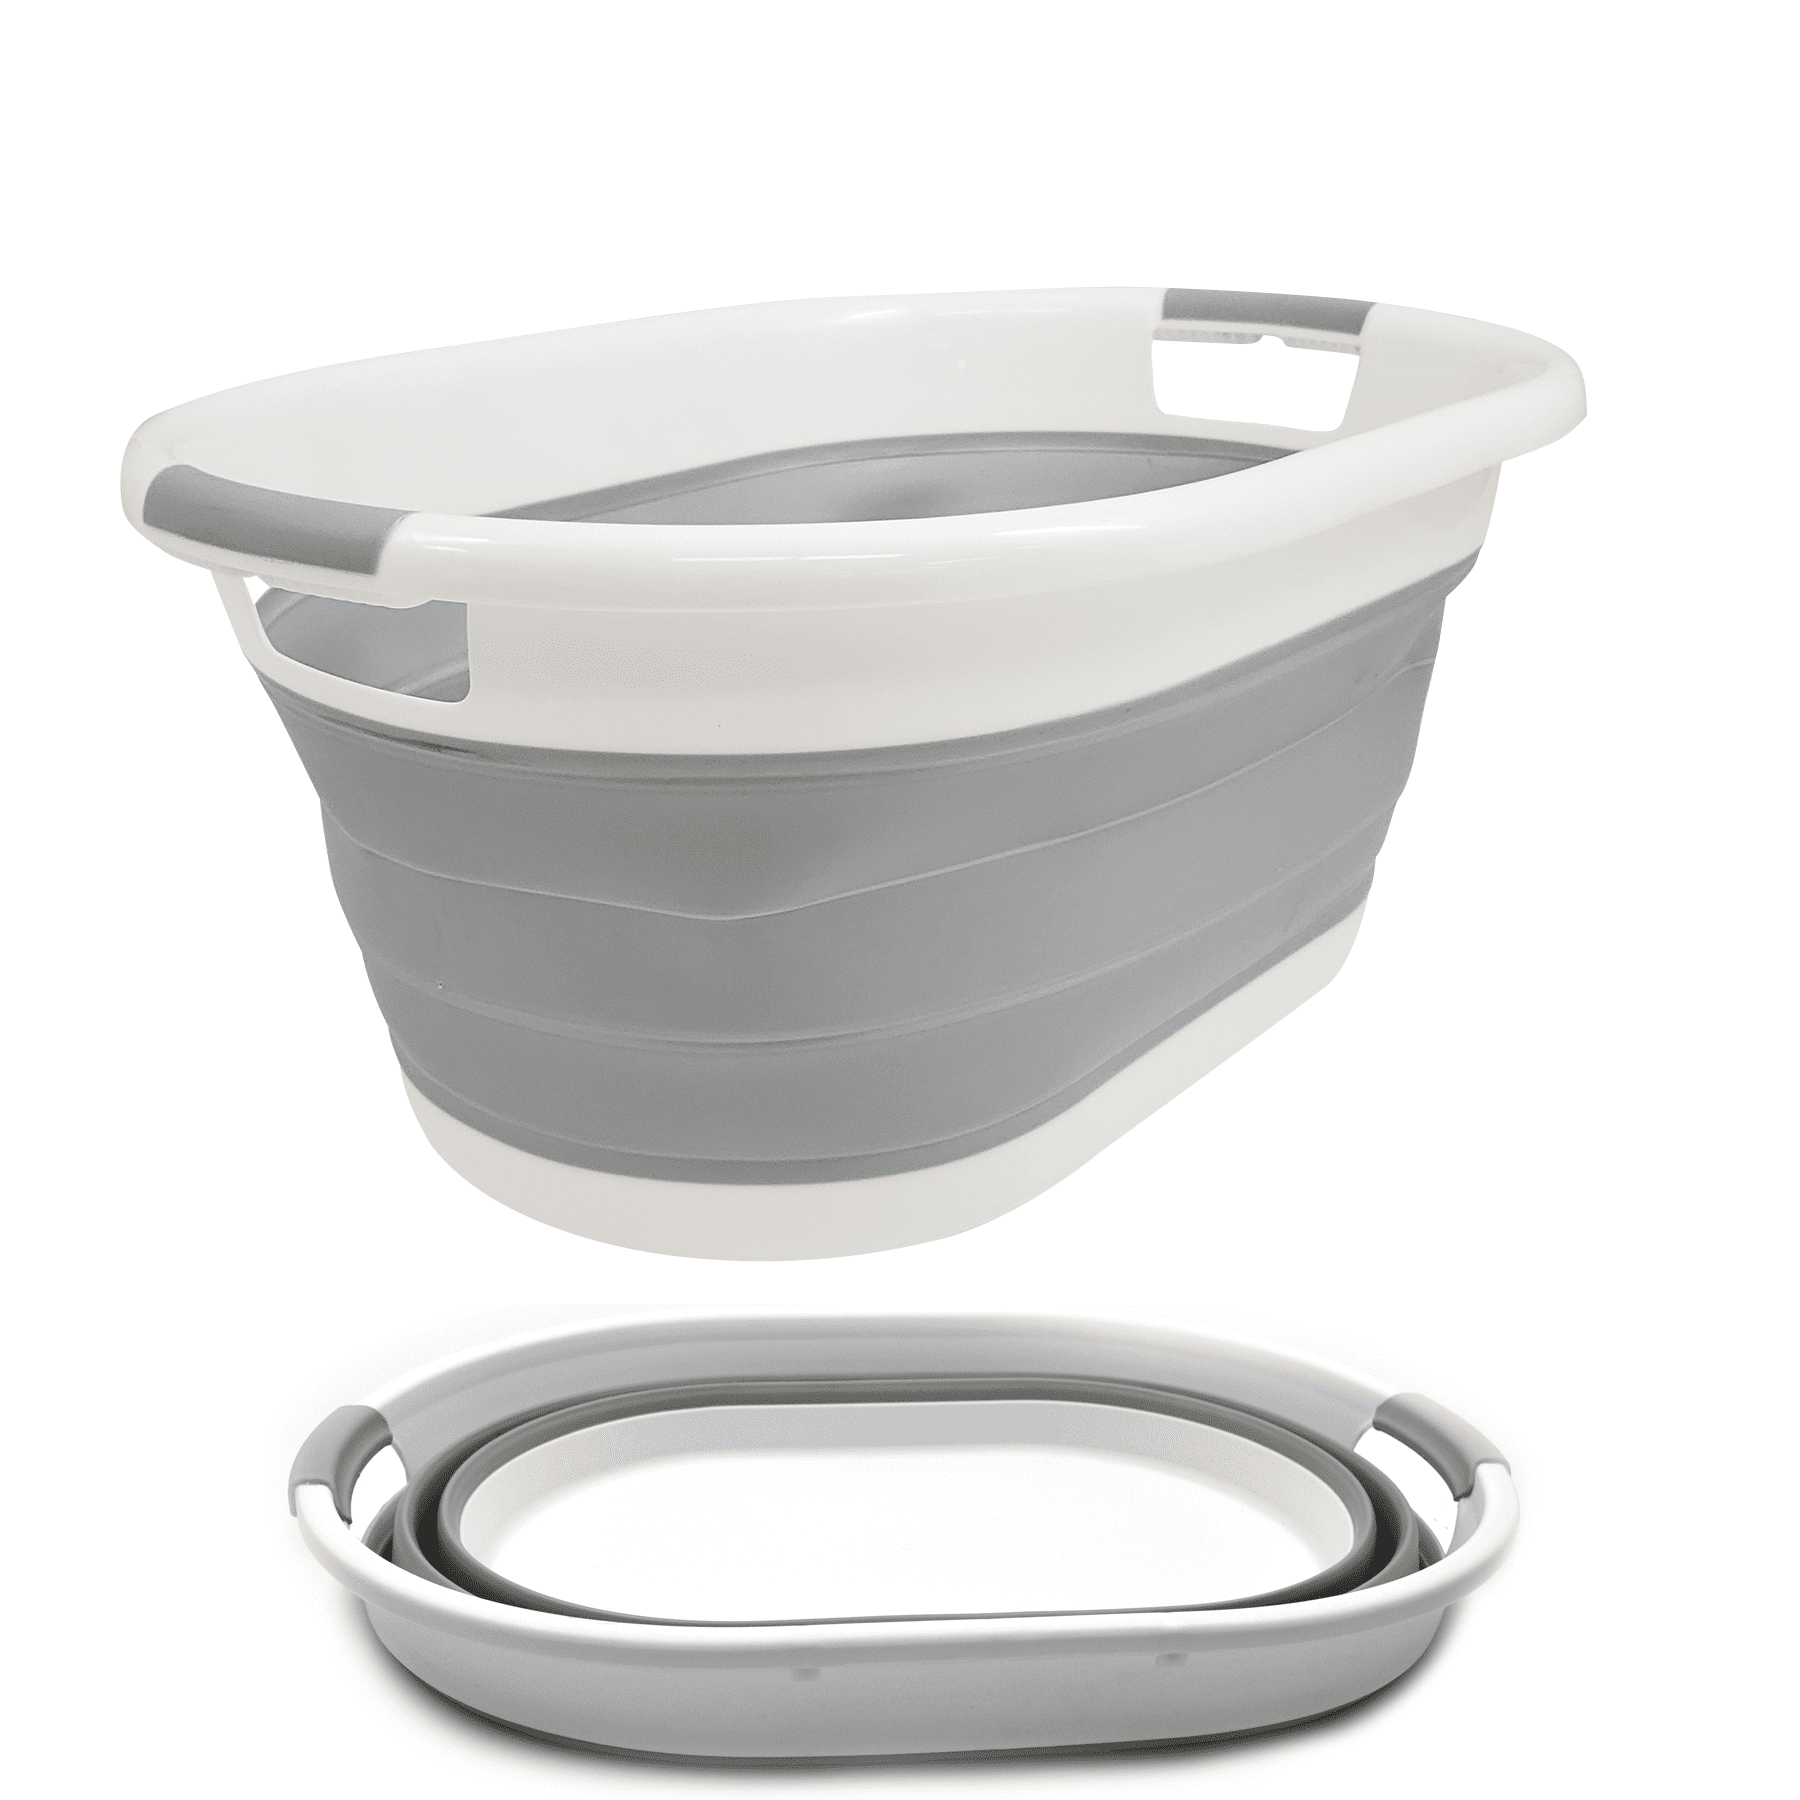 Space Saving Laundry Hamper Foldable Storage Container/Organizer Oval Tub/Basket Portable Washing Tub Grey, 2 SAMMART Set of 2 Collapsible Plastic Laundry Basket